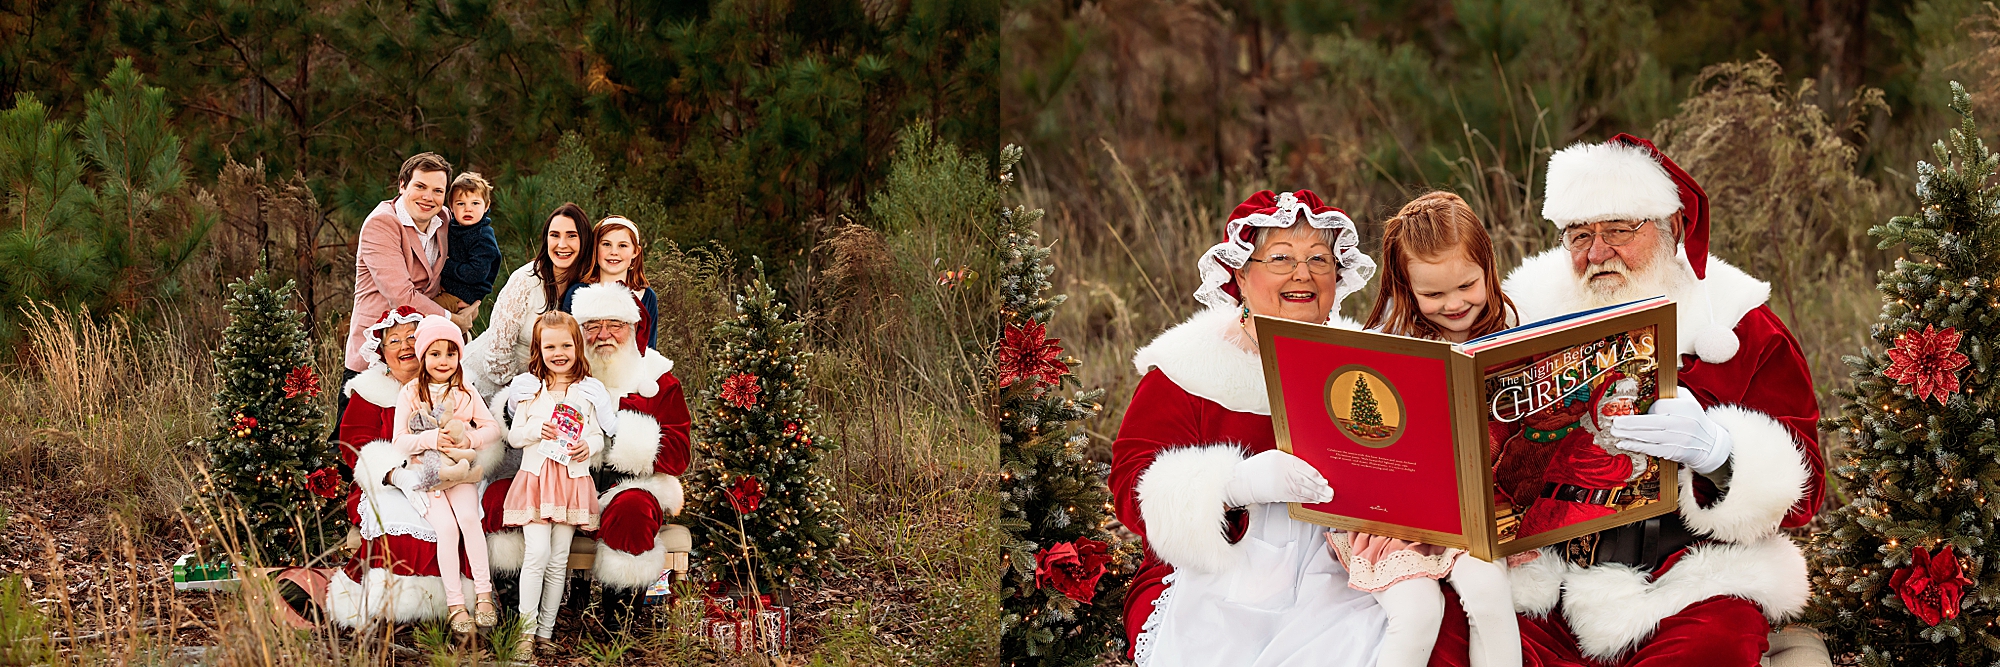 Dazzling Diva Photography Santa Experience